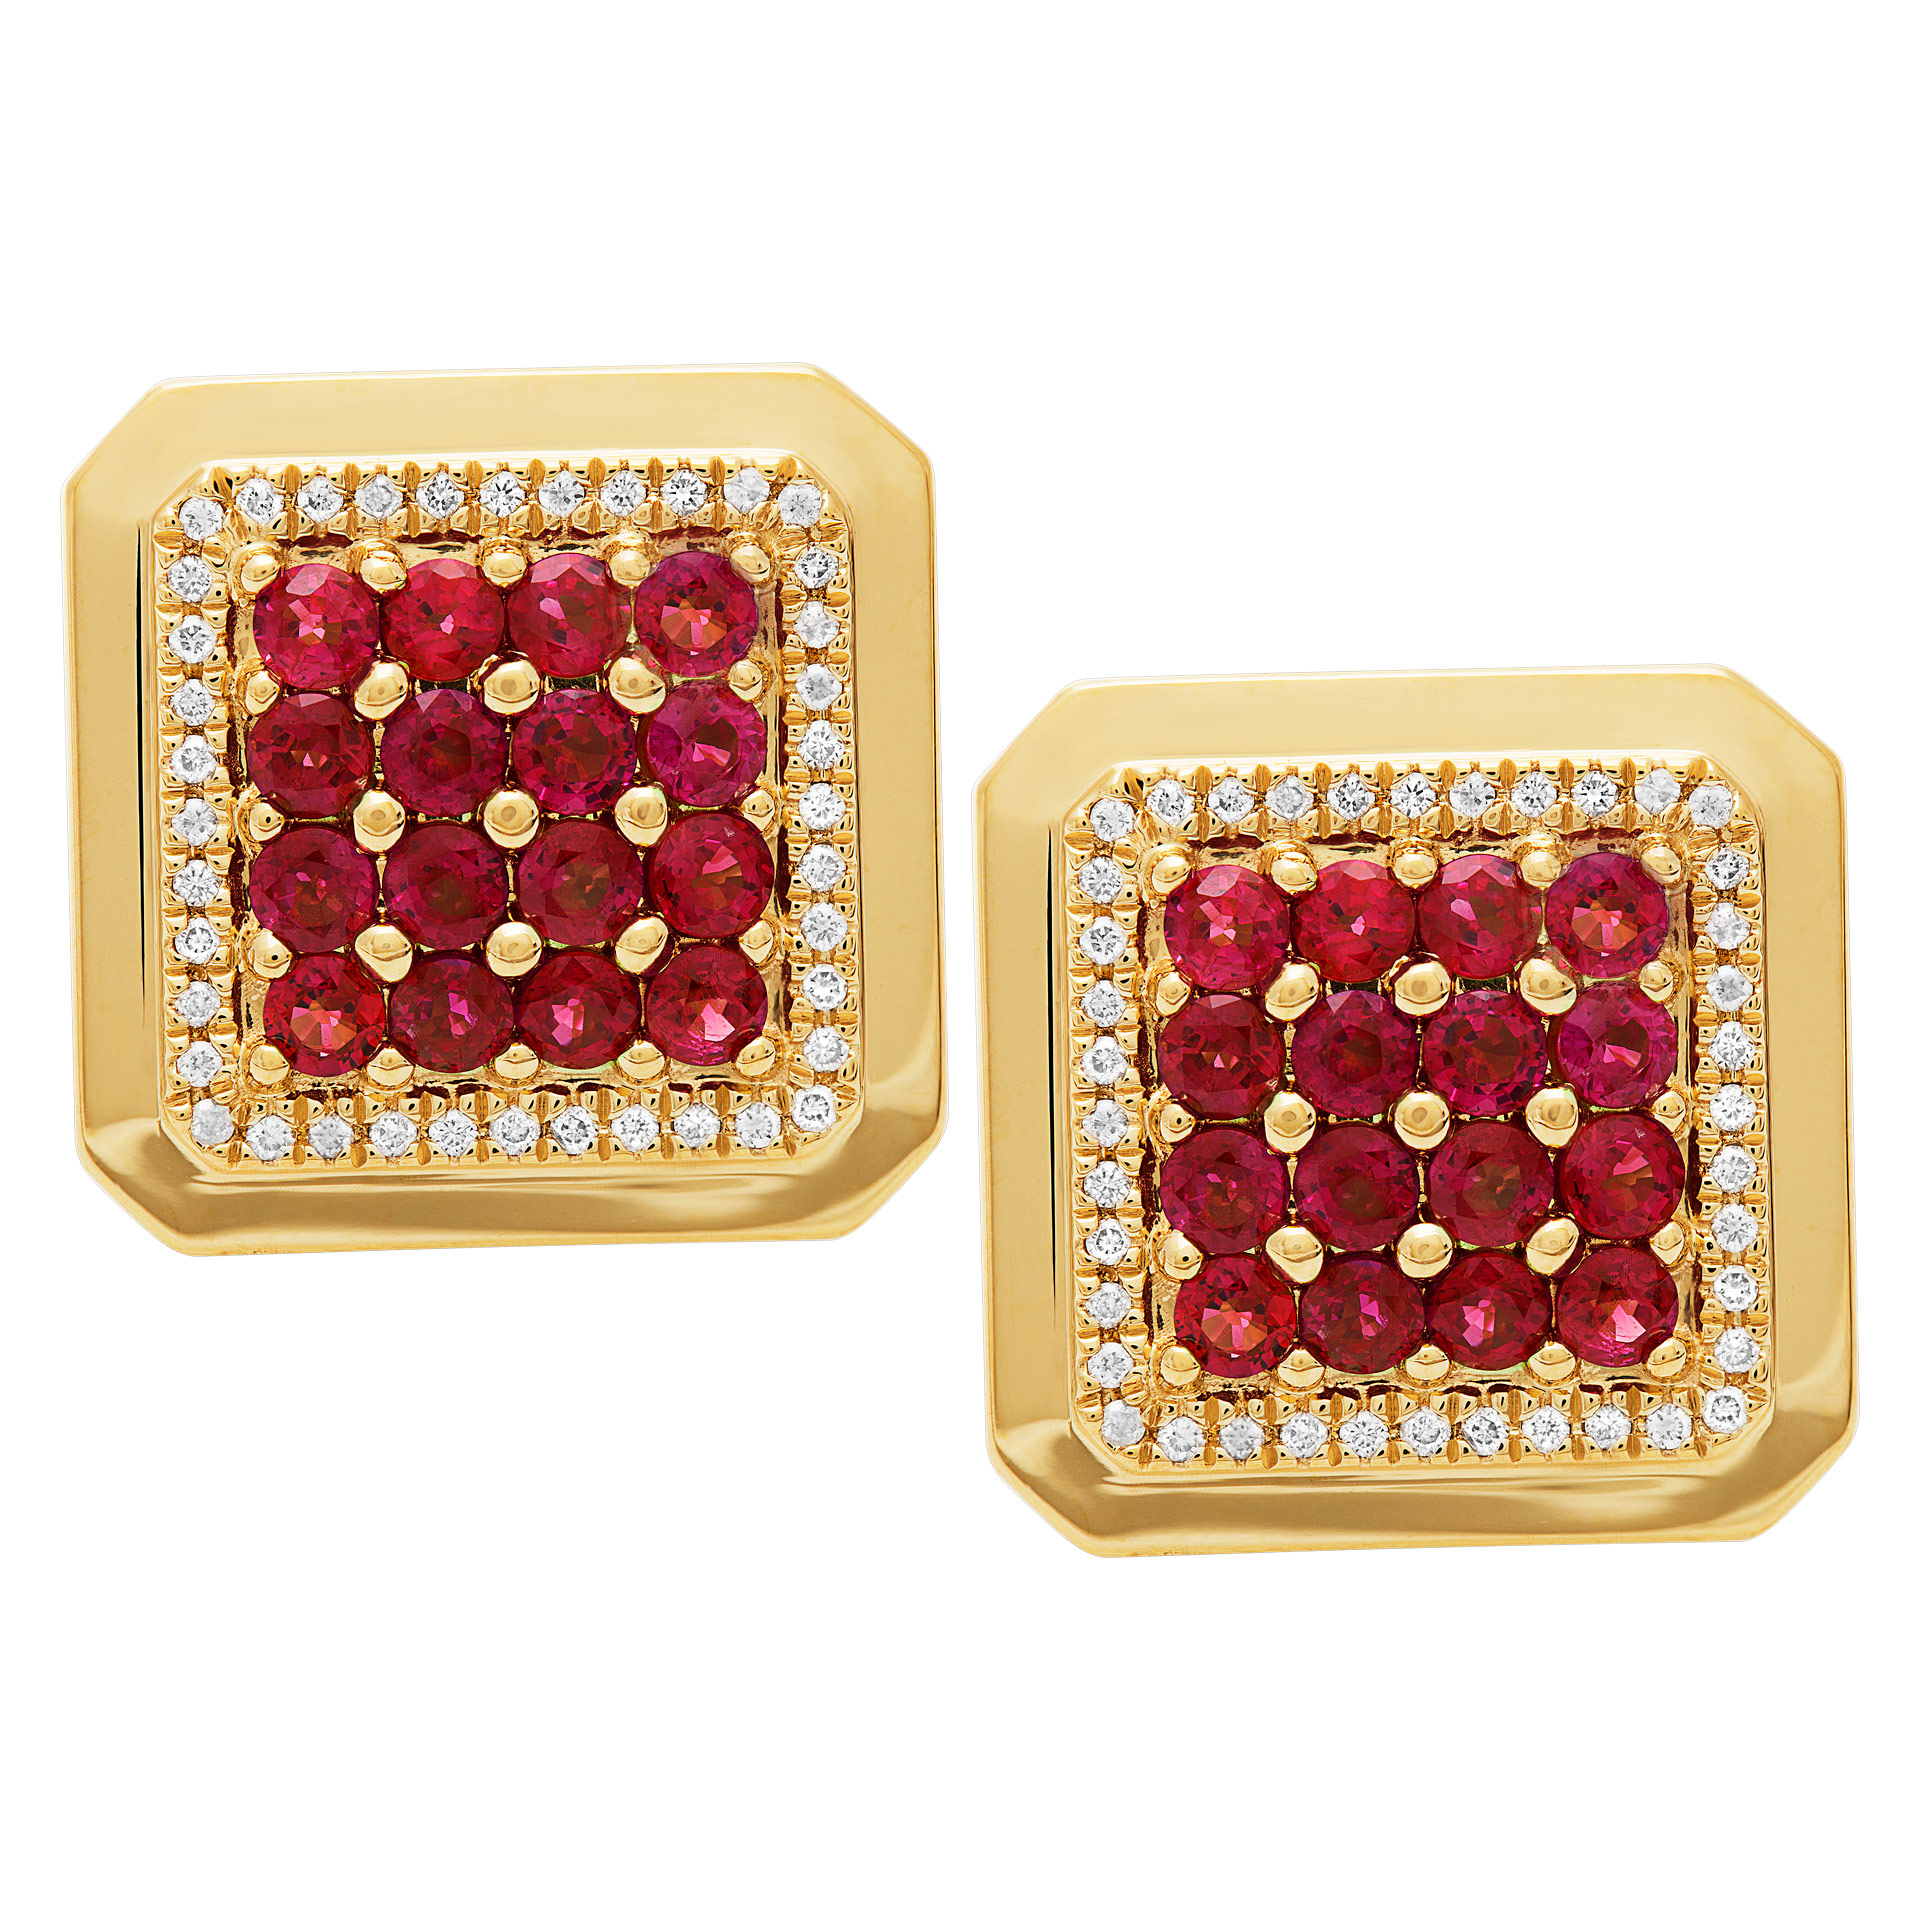 Ruby & diamond cufflinks in 18k yellow gold. 3.20 carats in rubies